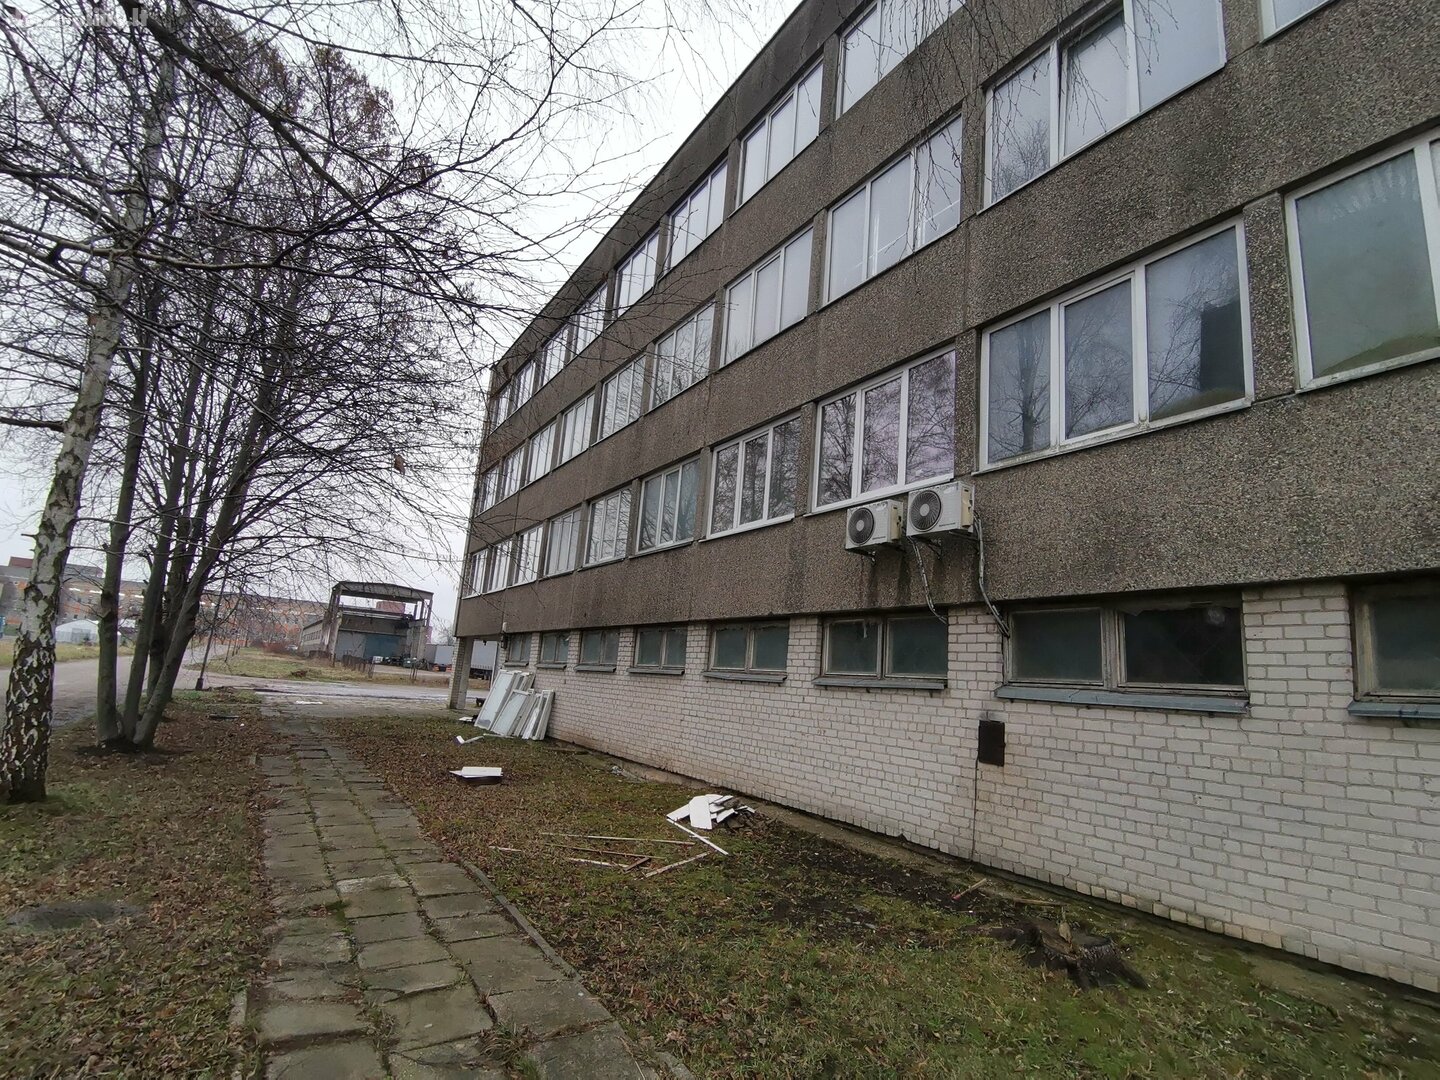 For sale Office / Storage / Commercial/service premises Alytuje, Putinuose, Pramonės g.